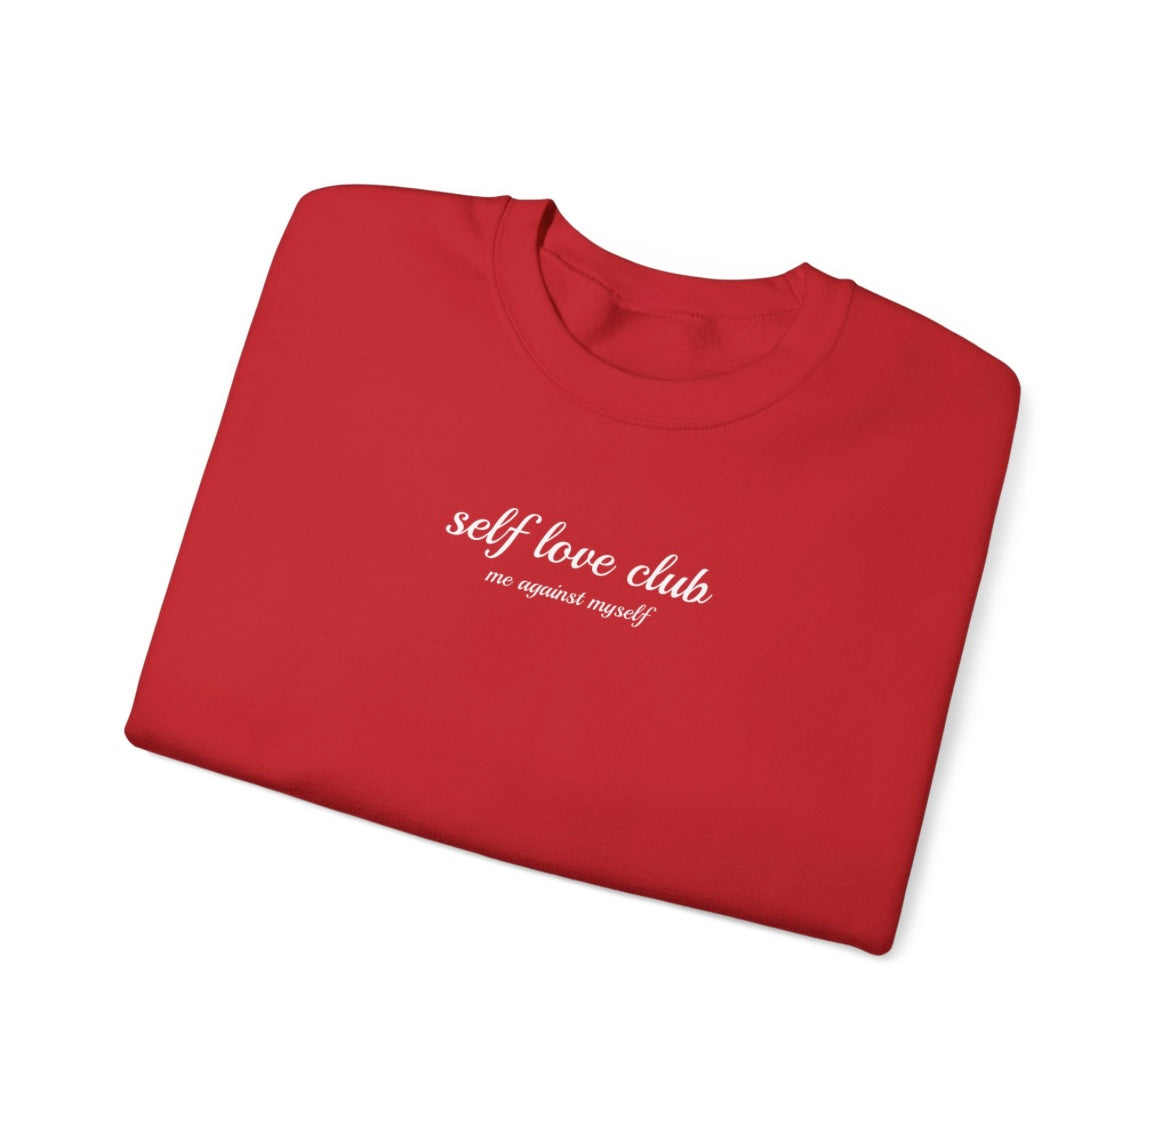 V-Day Inspired “Self Love Club” Crewneck